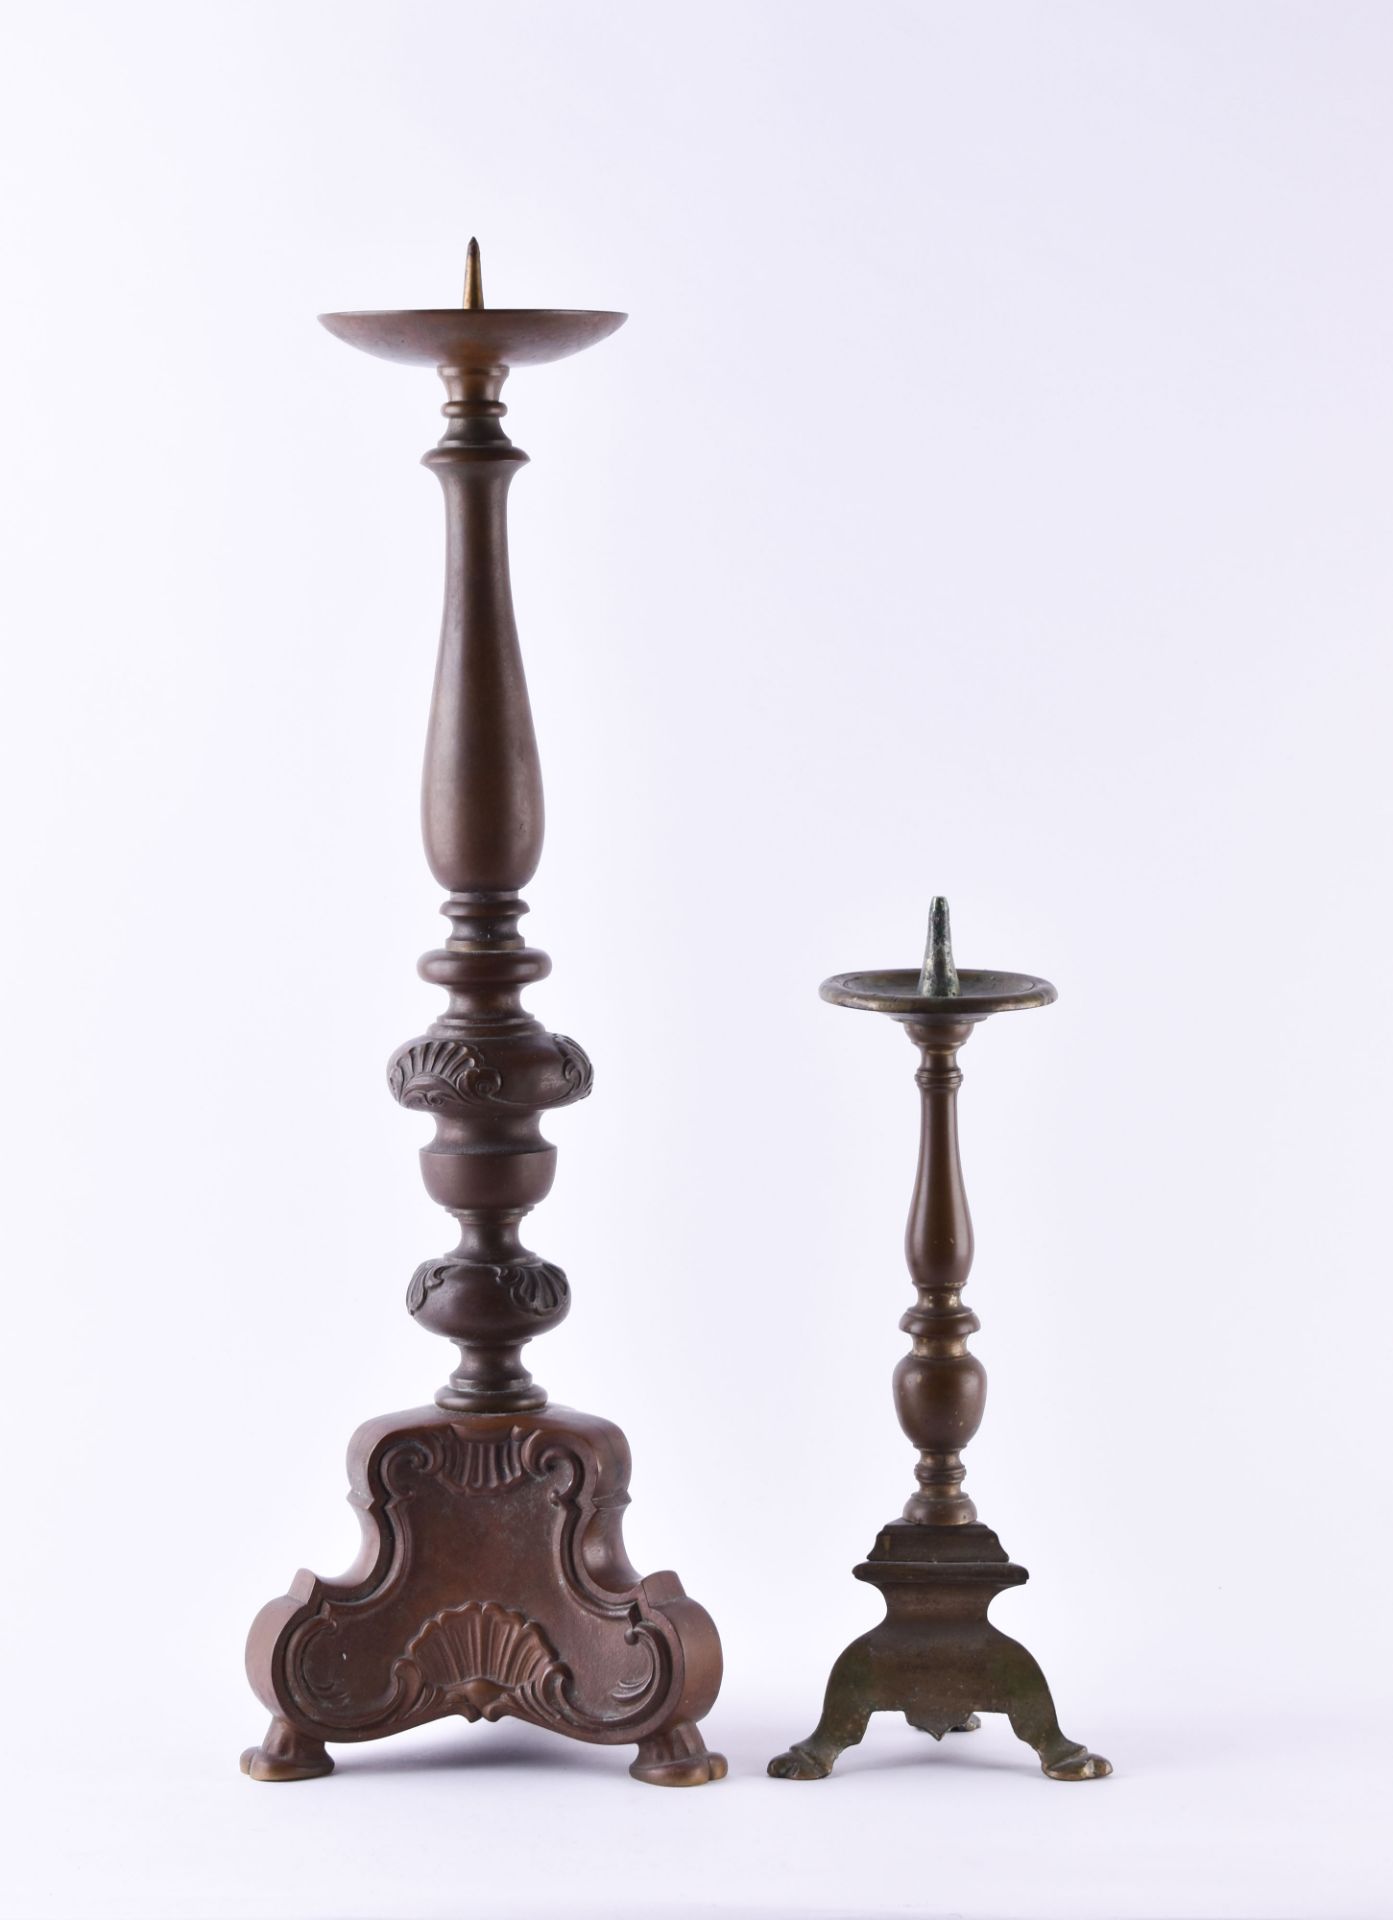 Two altar candlesticks